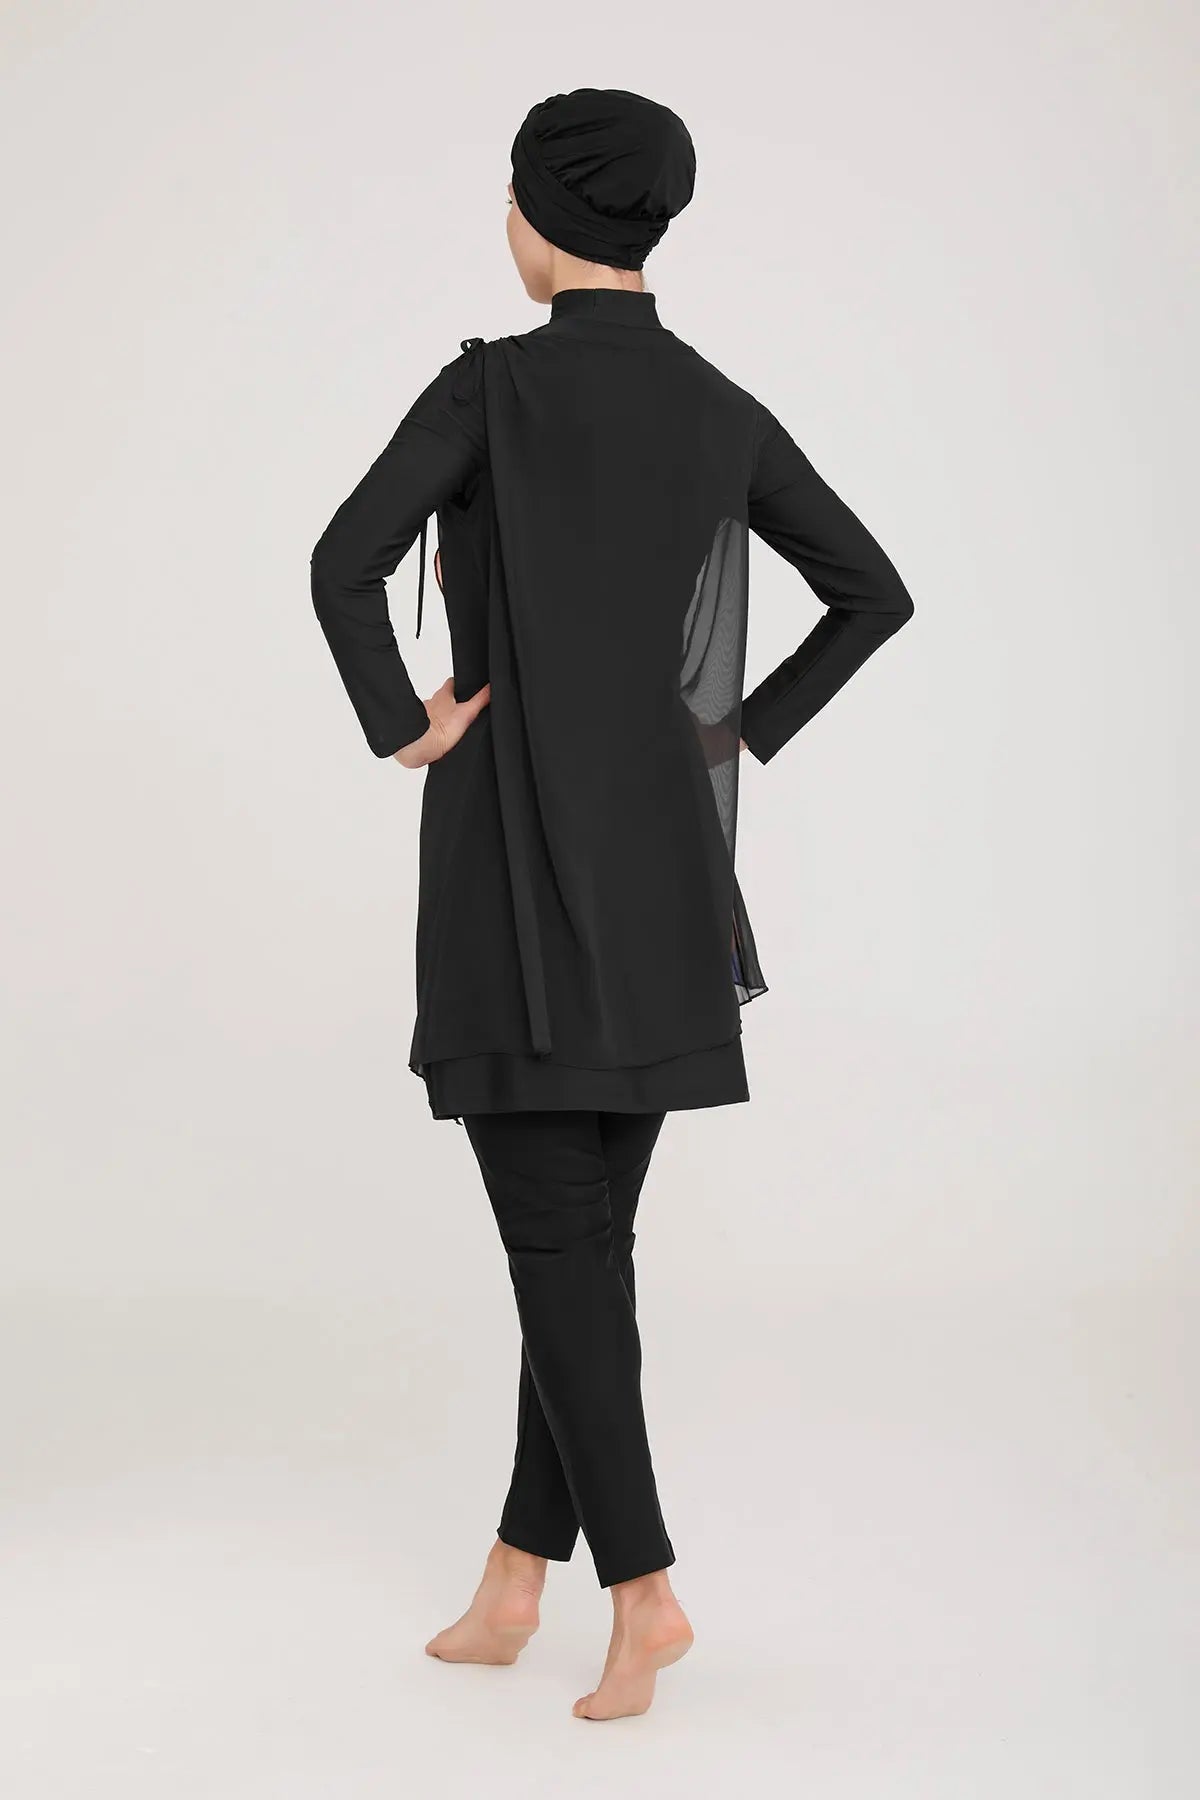 Adasea Burkini Lycra Swimsuit-4471 Voile Fashion